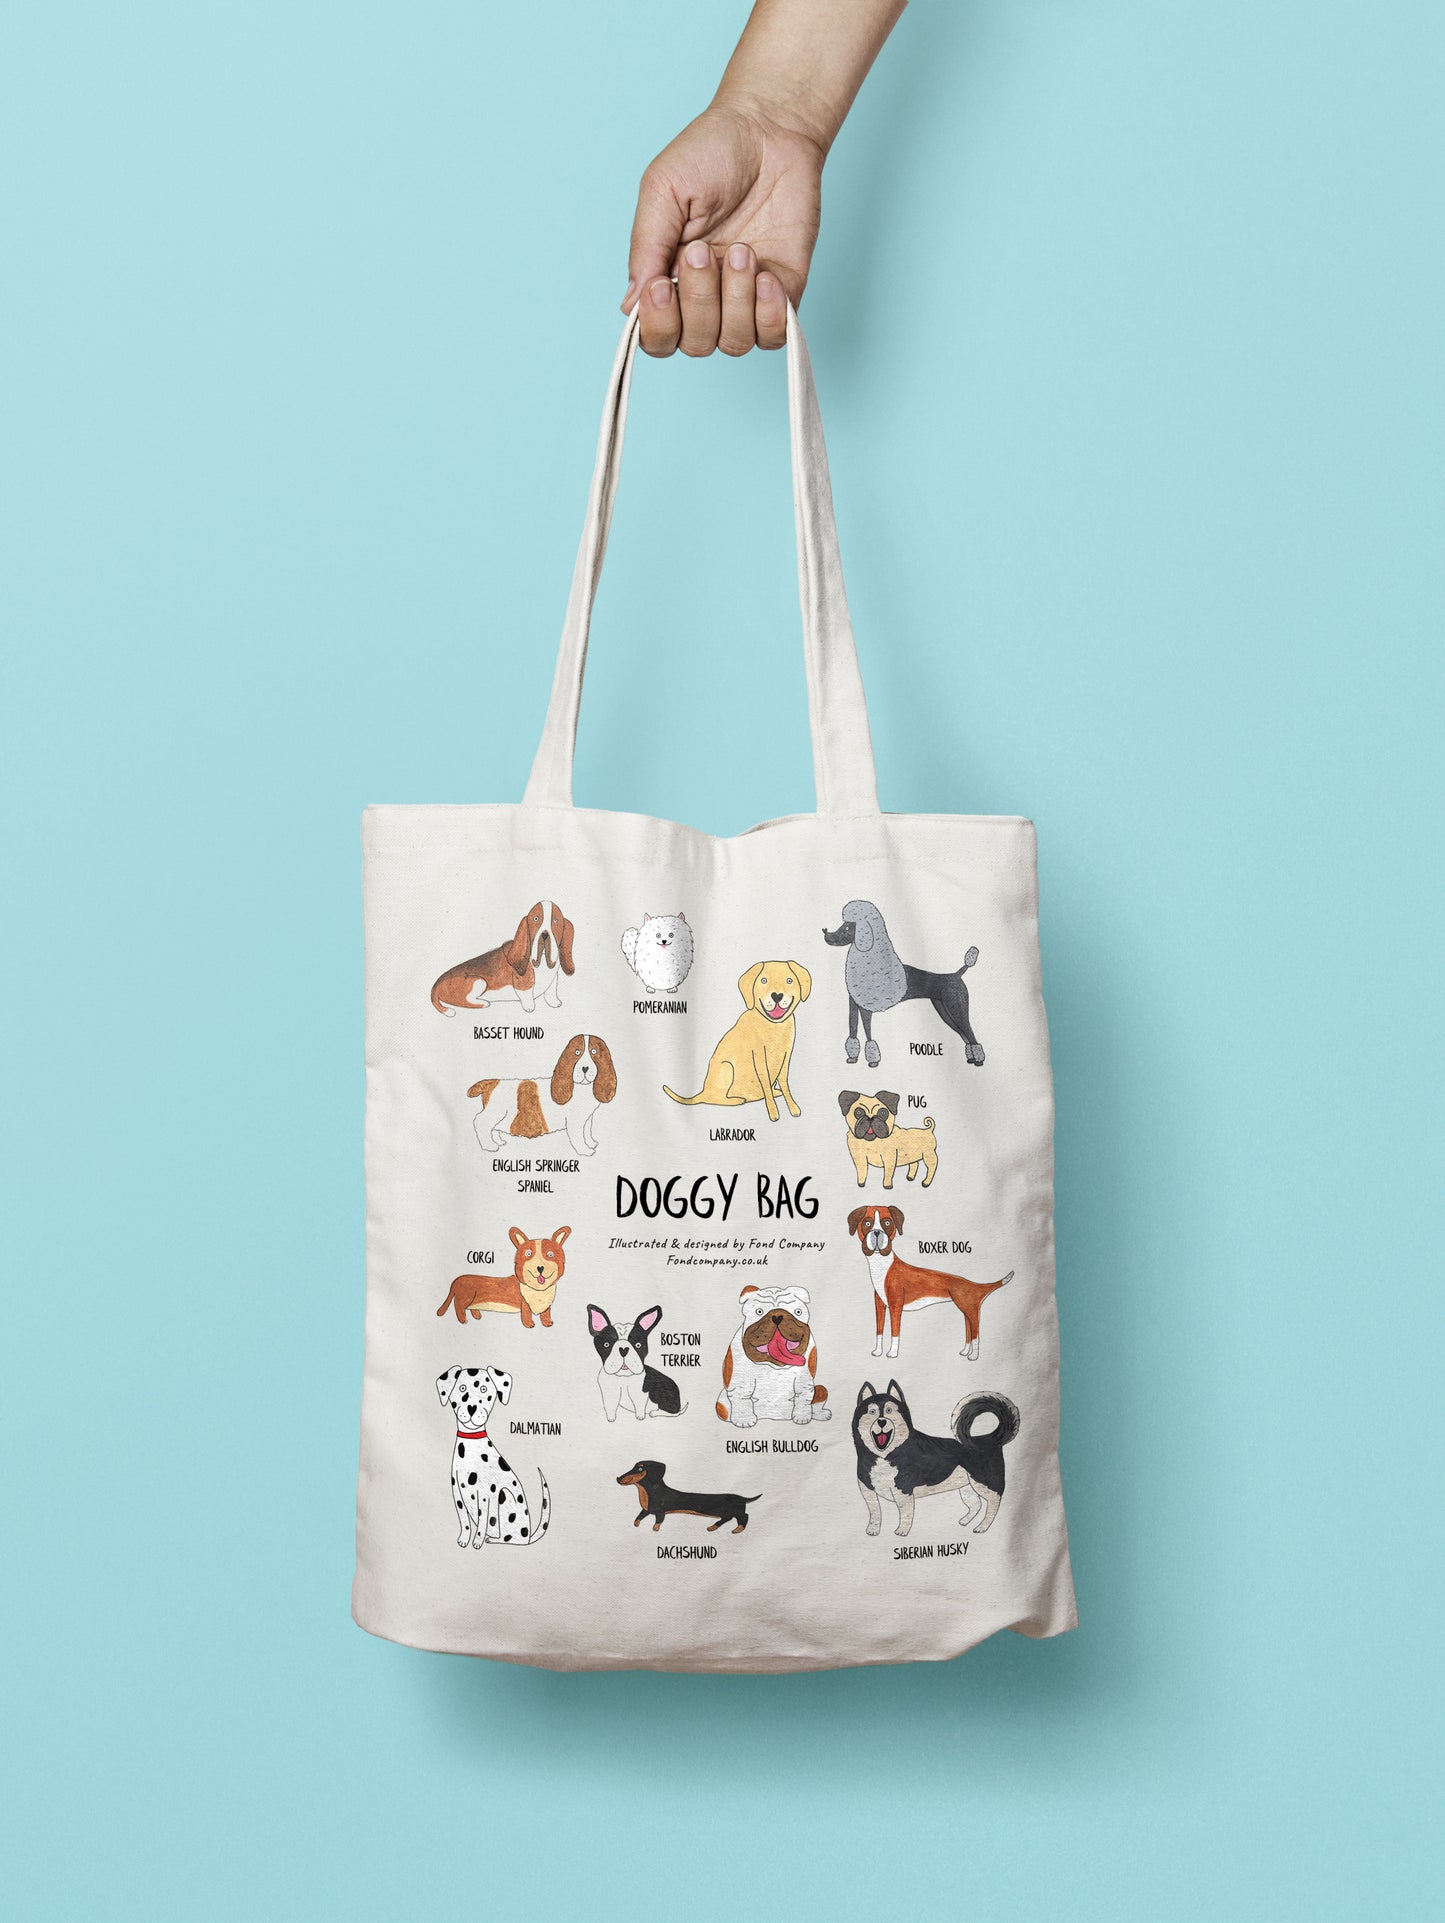 Doggy bag - illustrated Dog tote bag